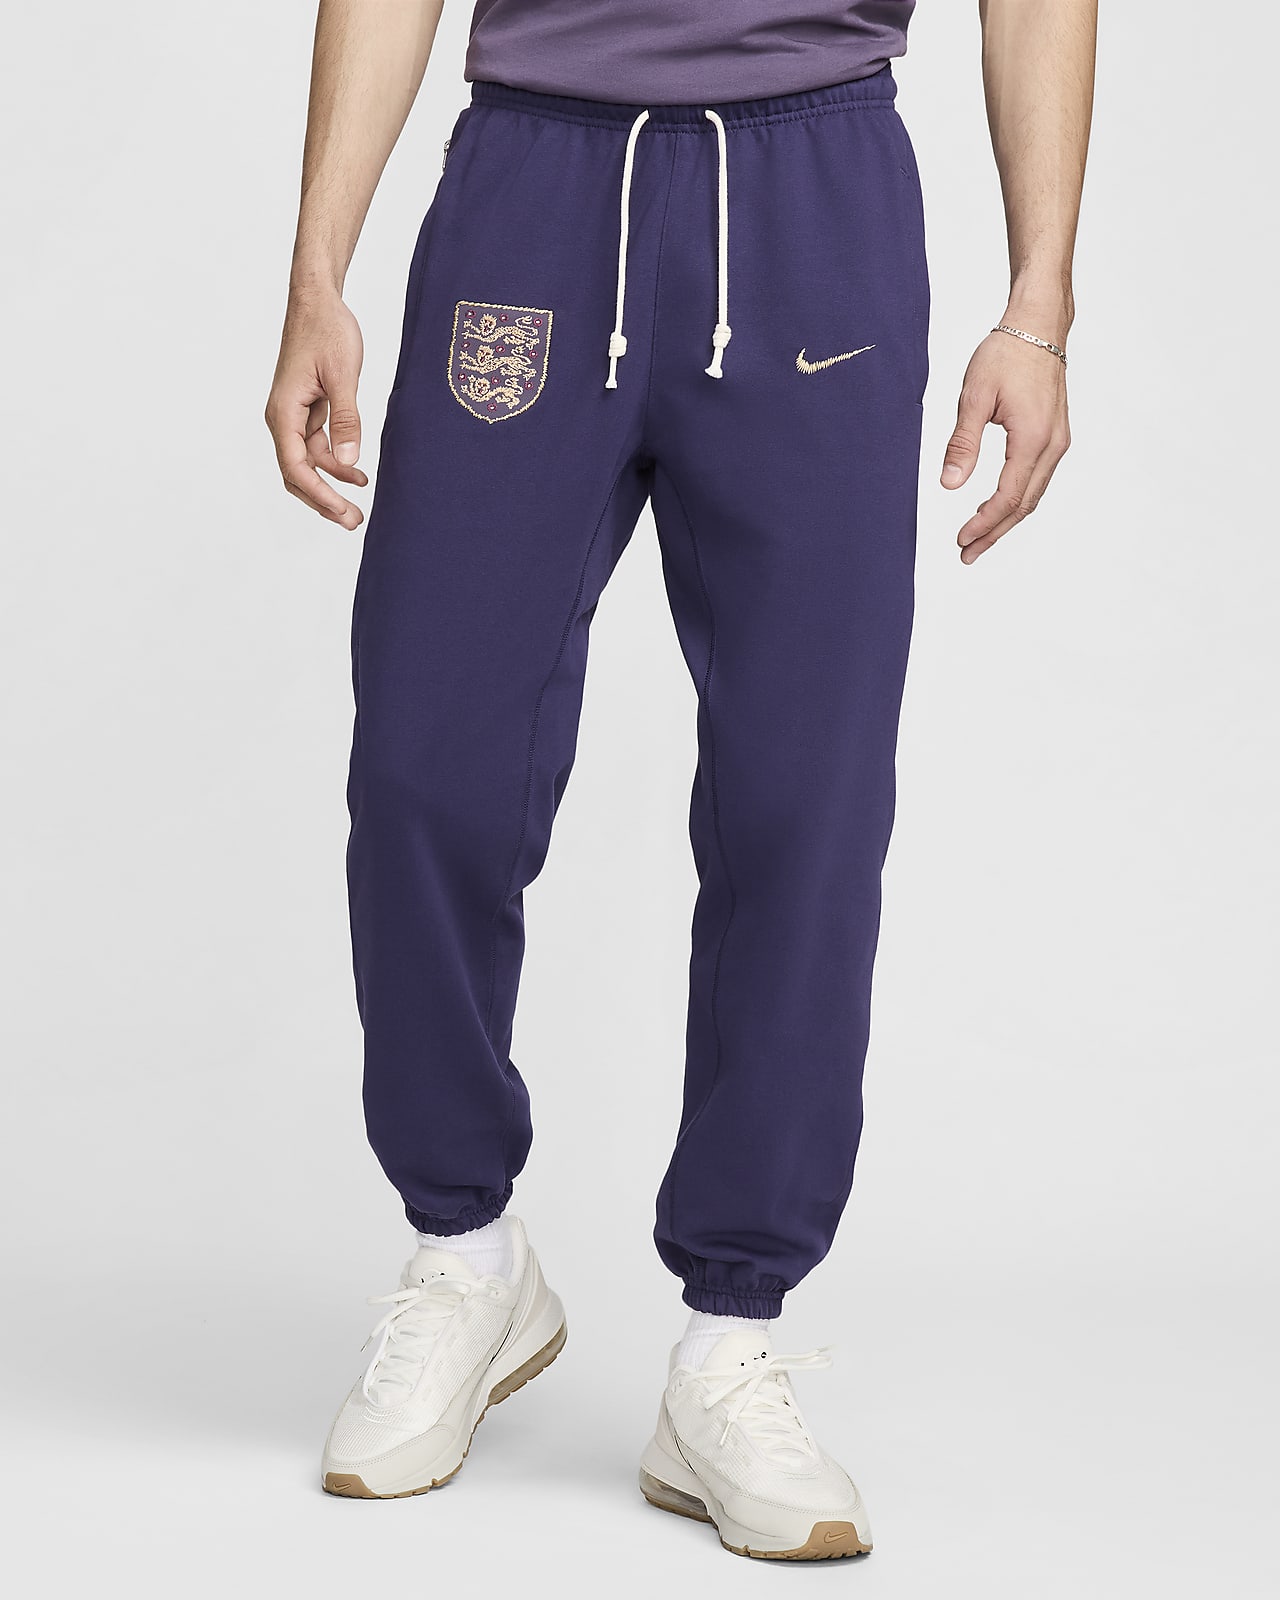 England Standard Issue Men's Nike Football Pants